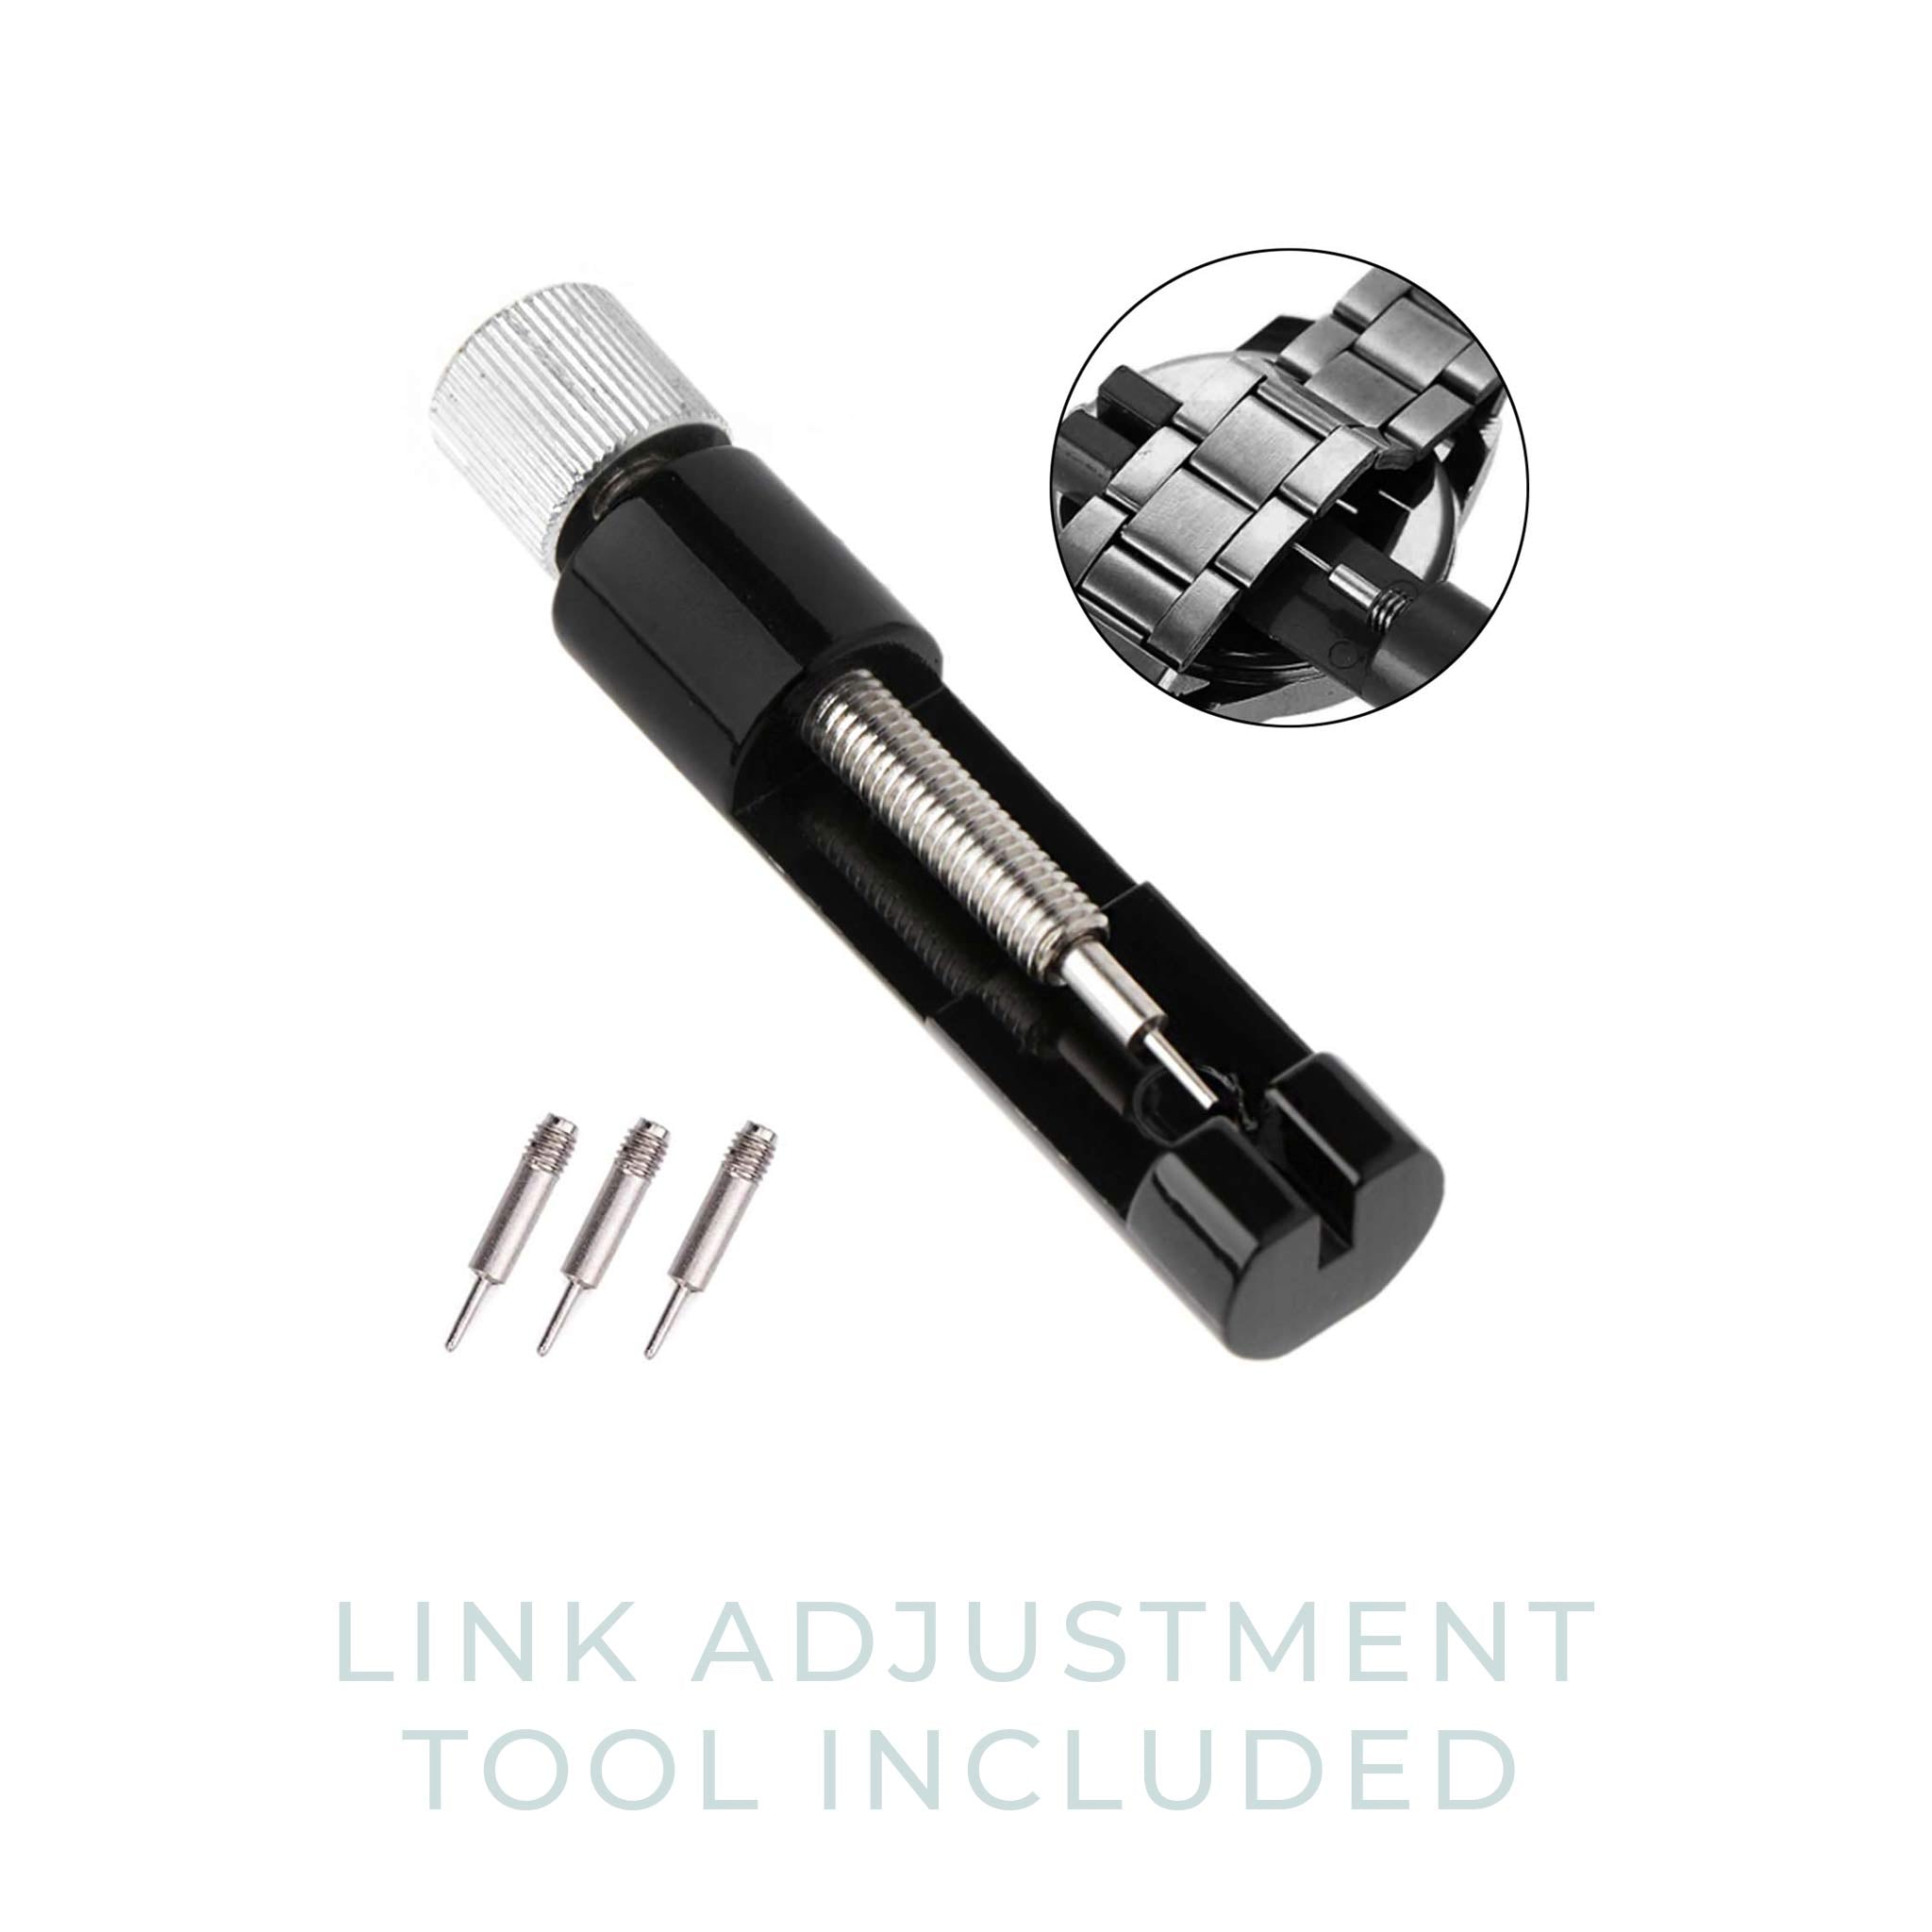 Link adjustment tool